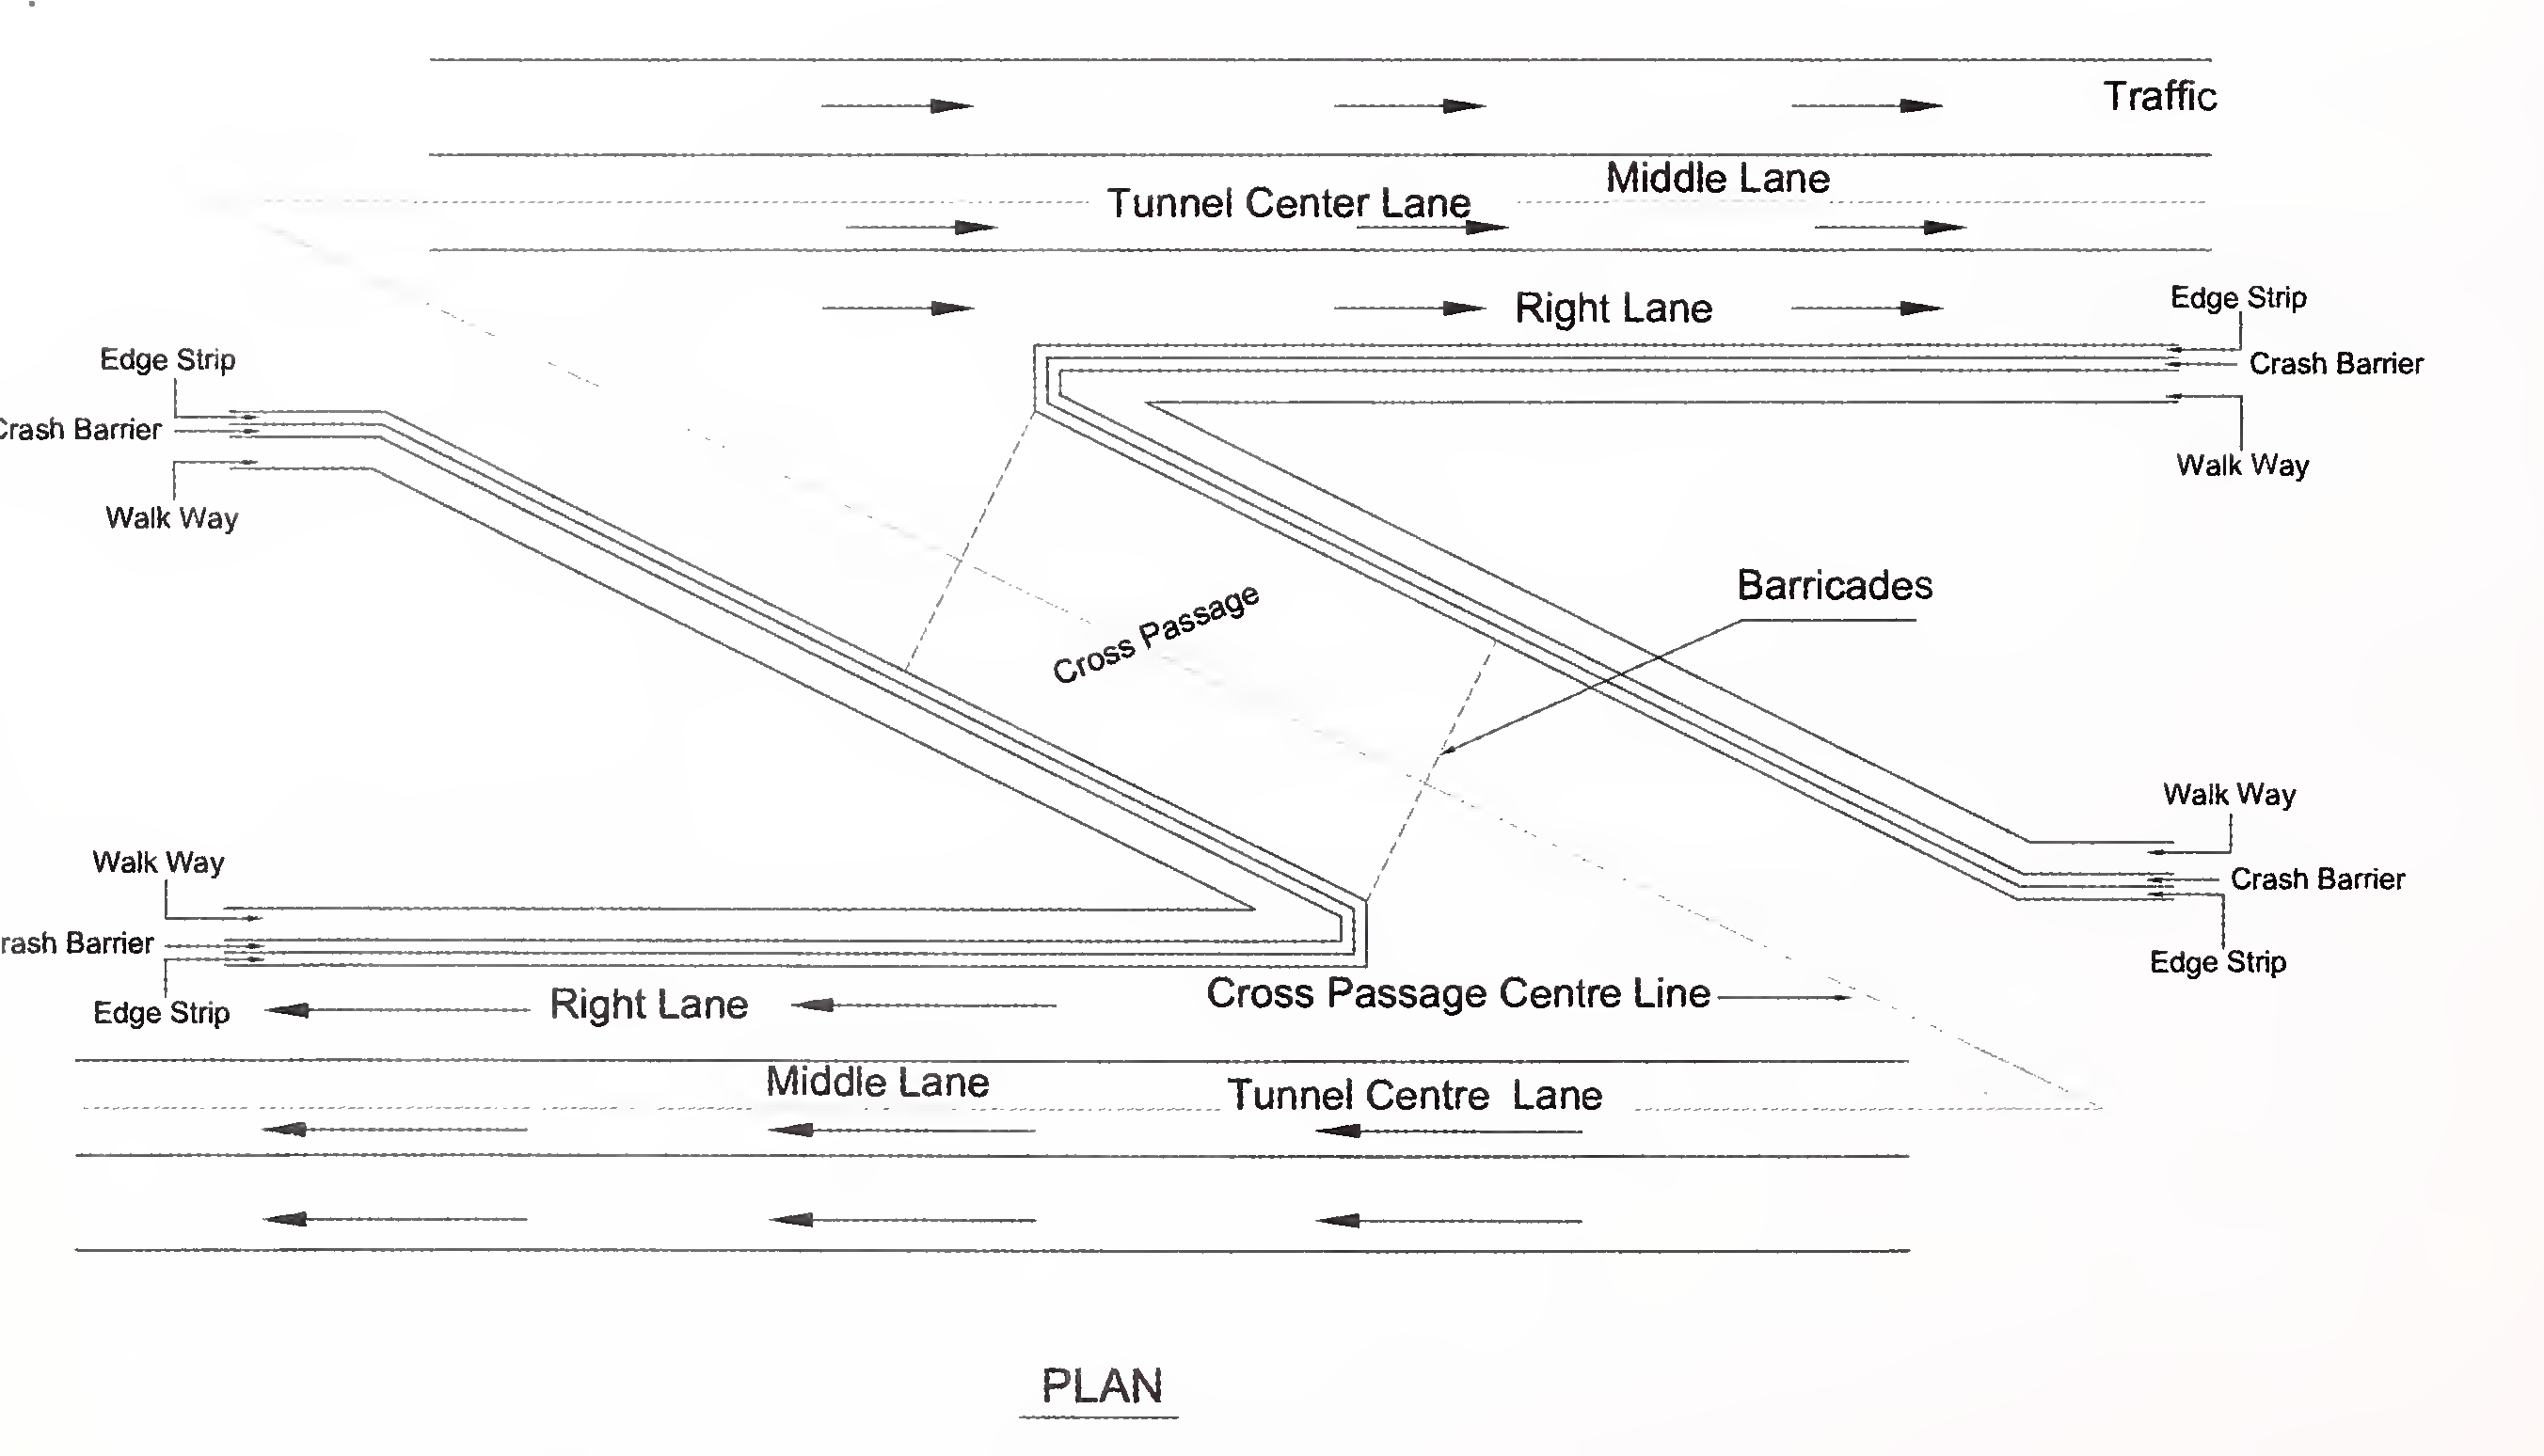 Fig. 7.4 Tunnel Passage